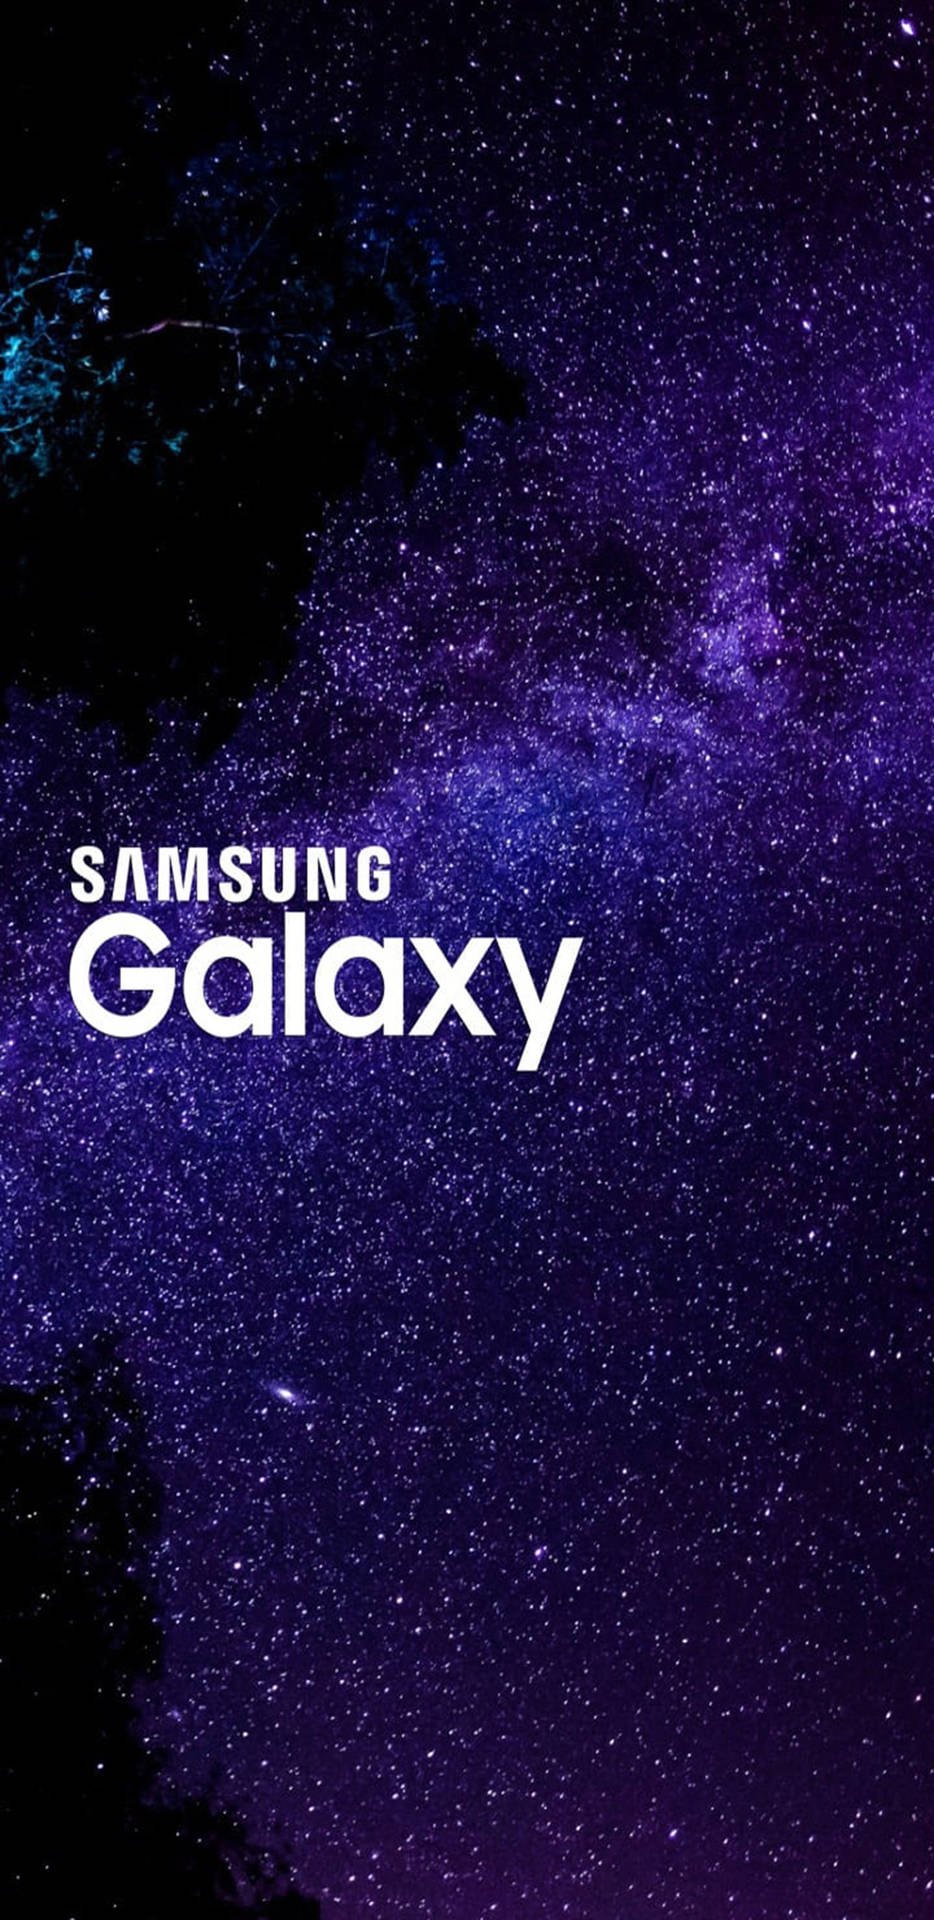 Free Samsung Galaxy Wallpaper Downloads, Samsung Galaxy Wallpaper for FREE